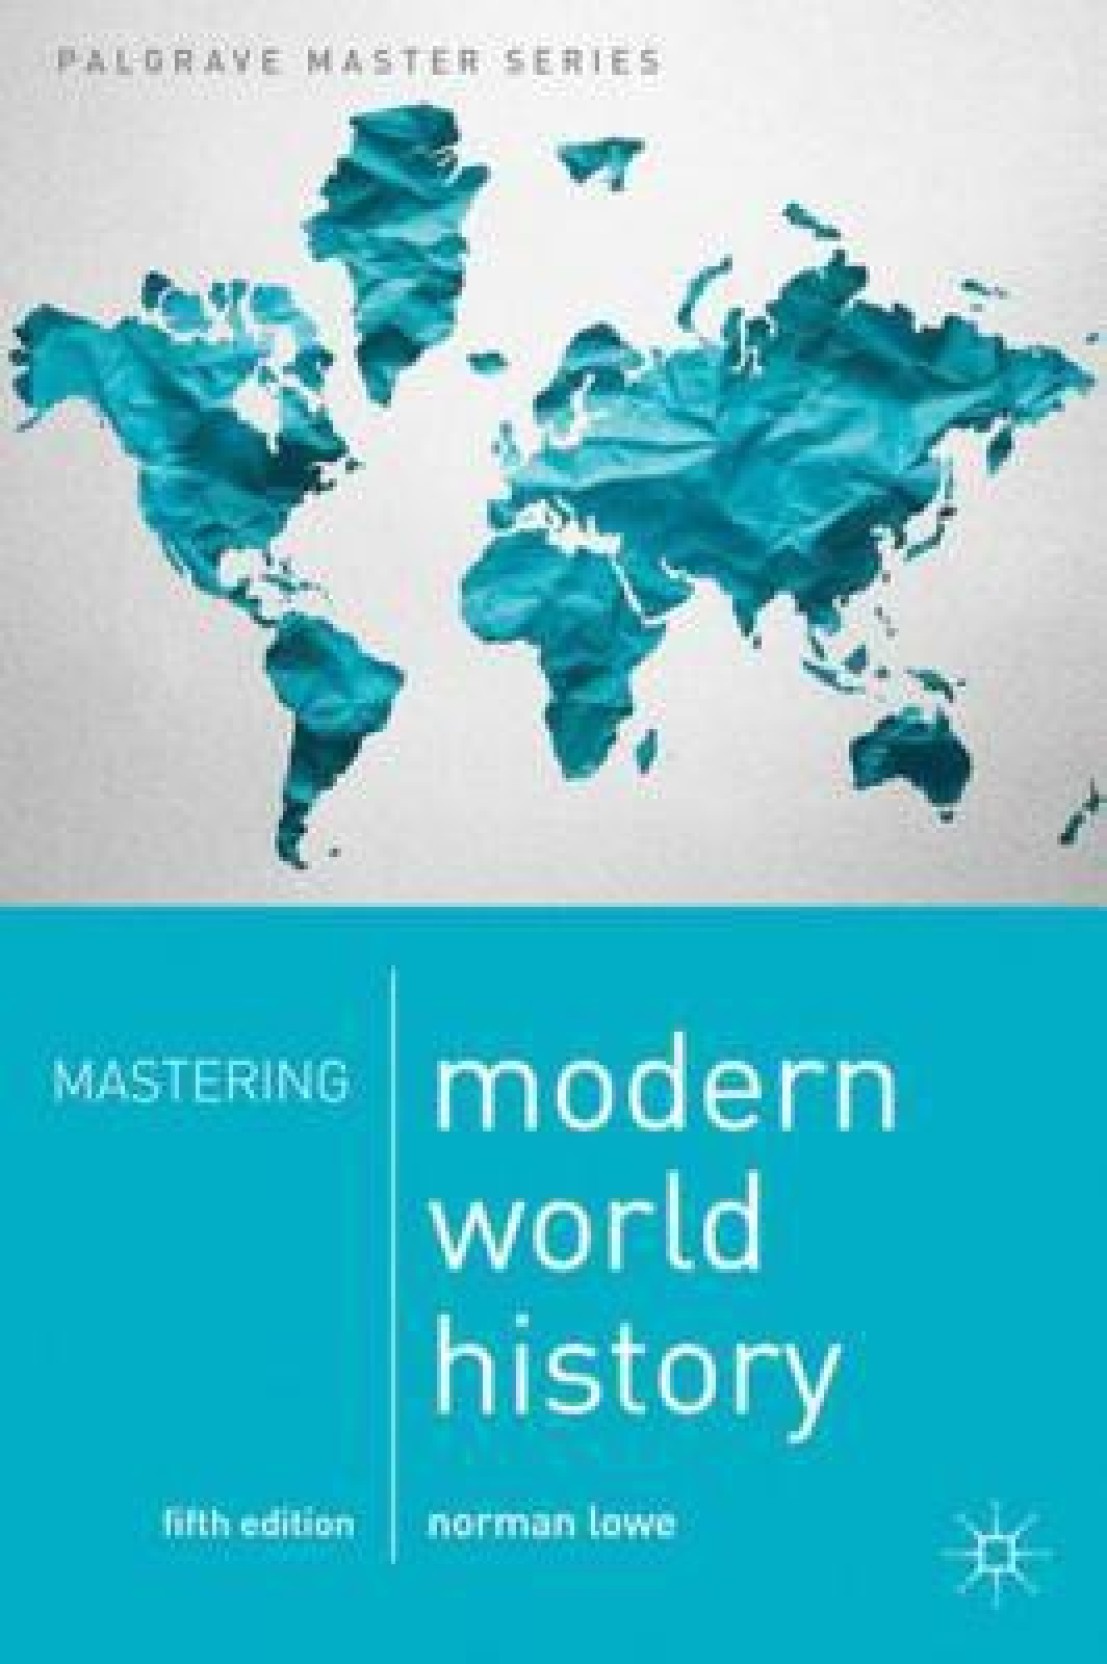 Mastering Modern World History 5th Edition Buy Mastering Modern World